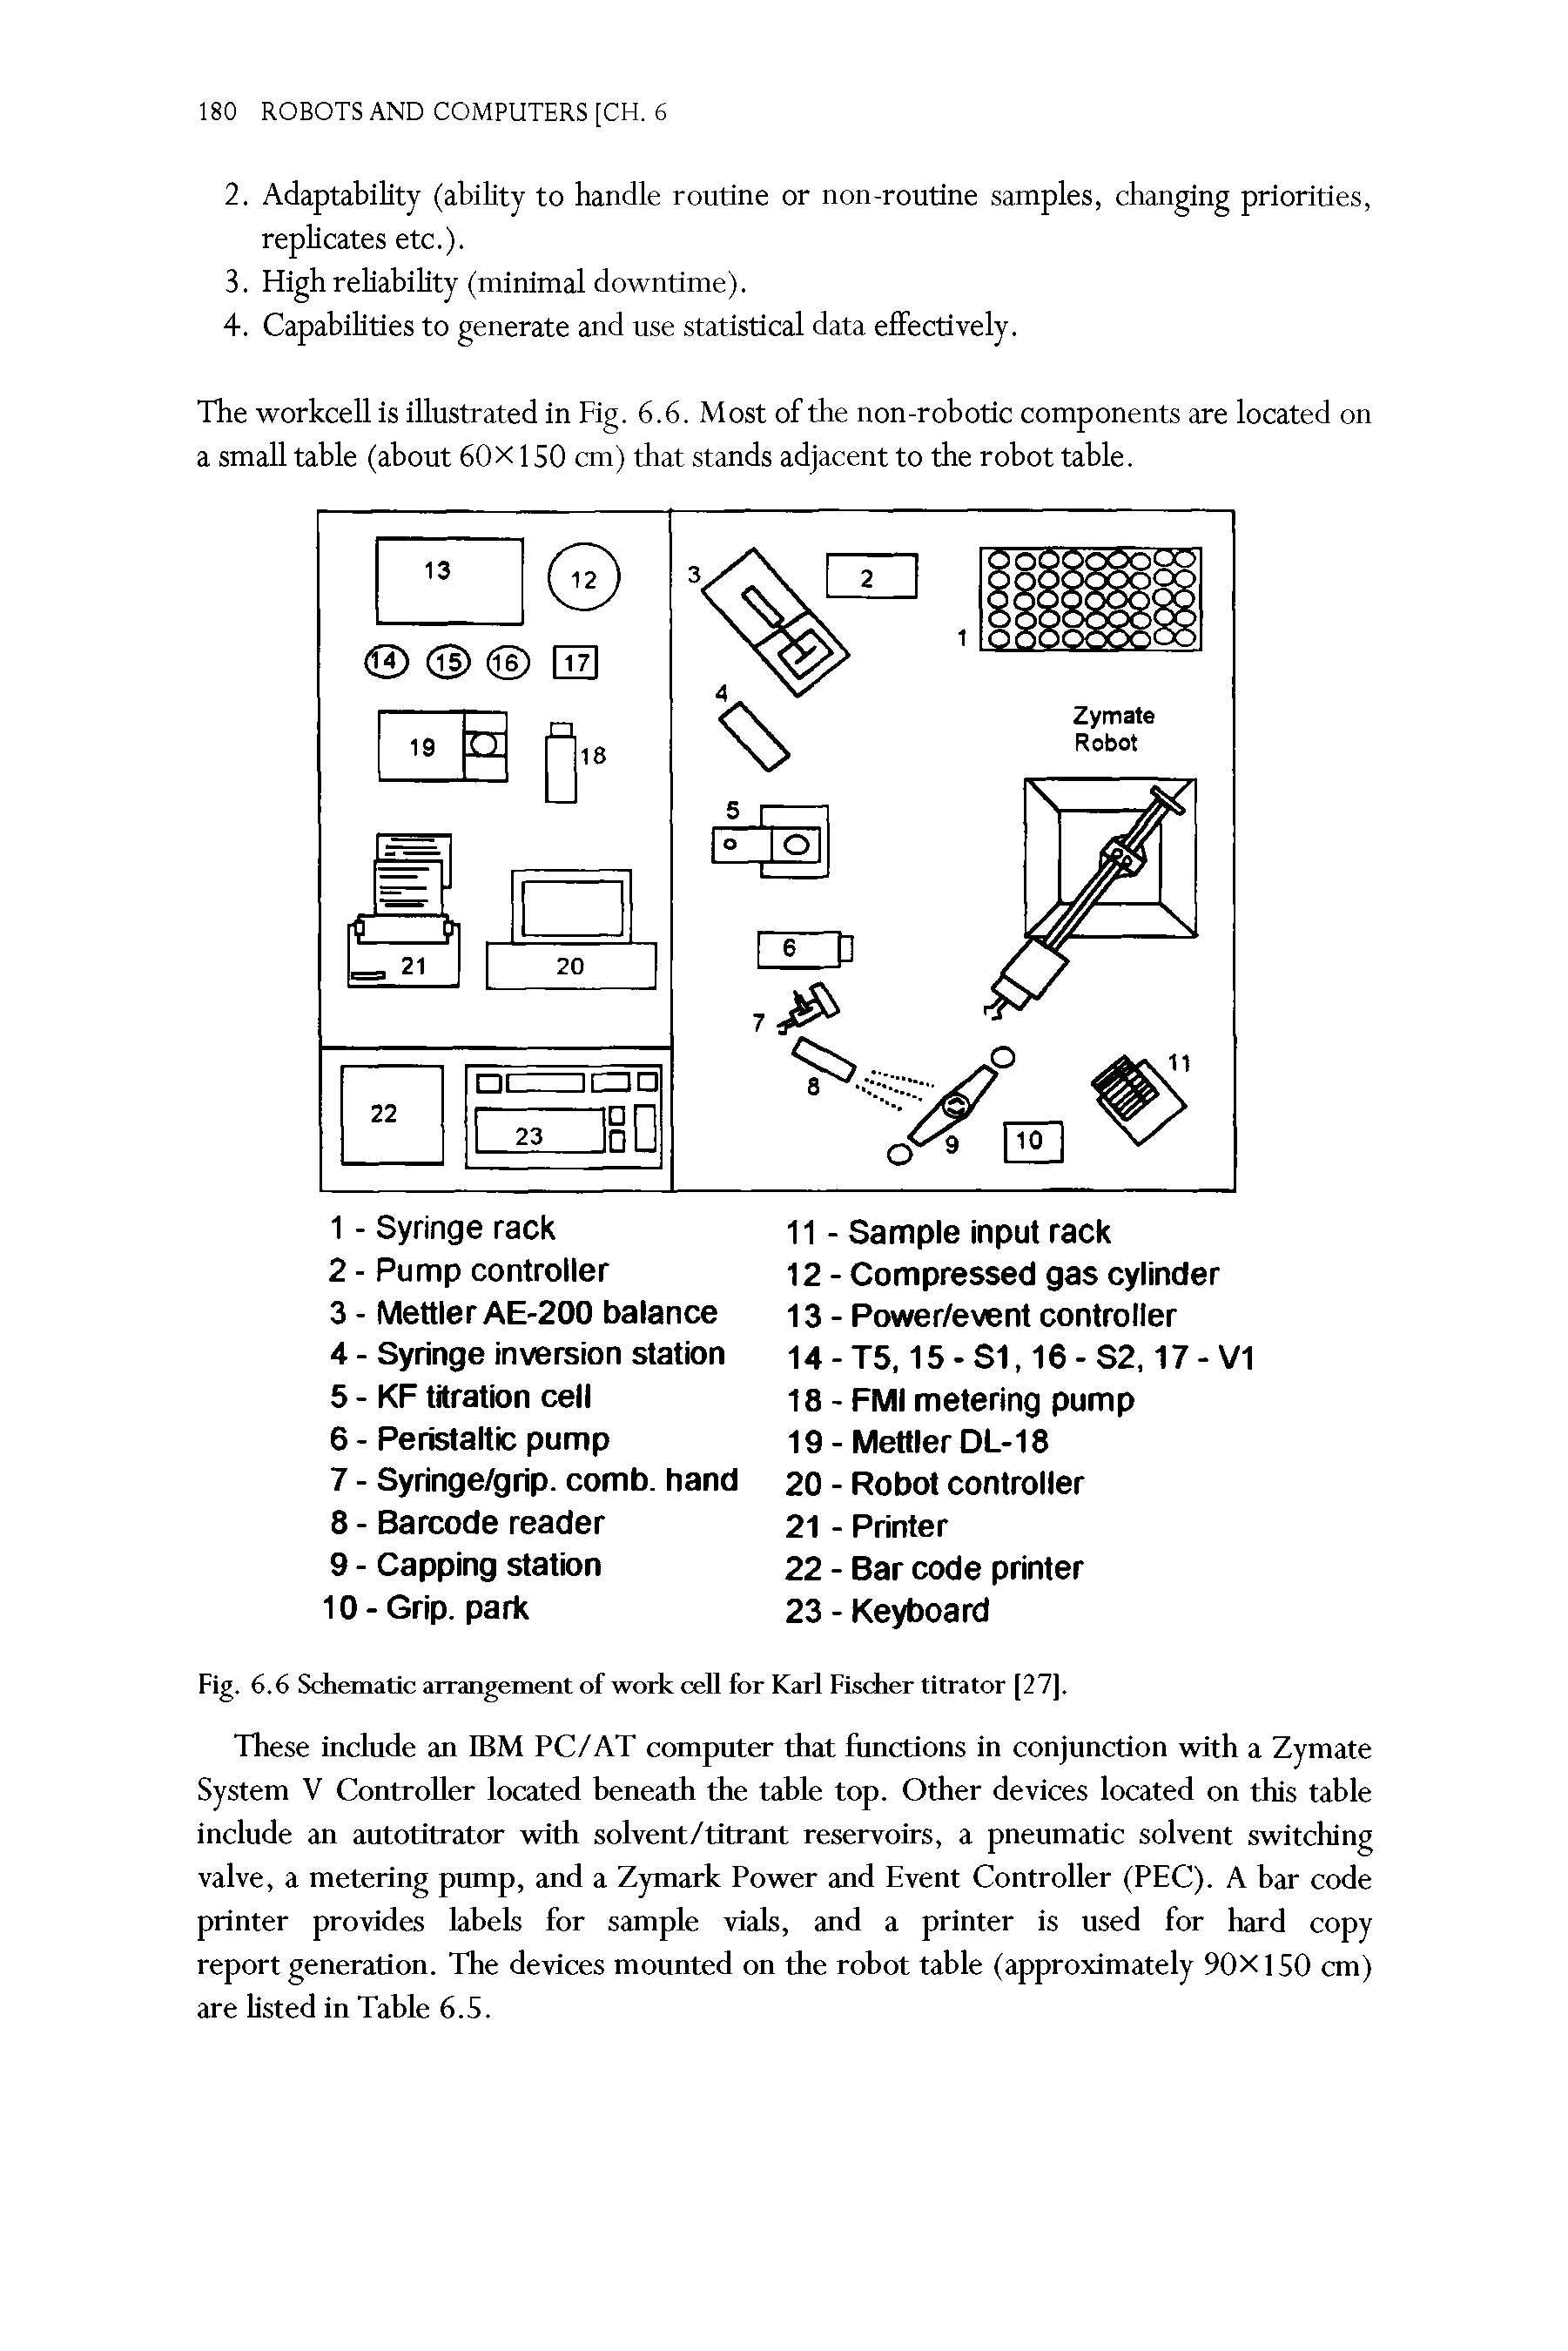 Fig. 6.6 Schematic arrangement of work cell for Karl Fischer titrator [27].